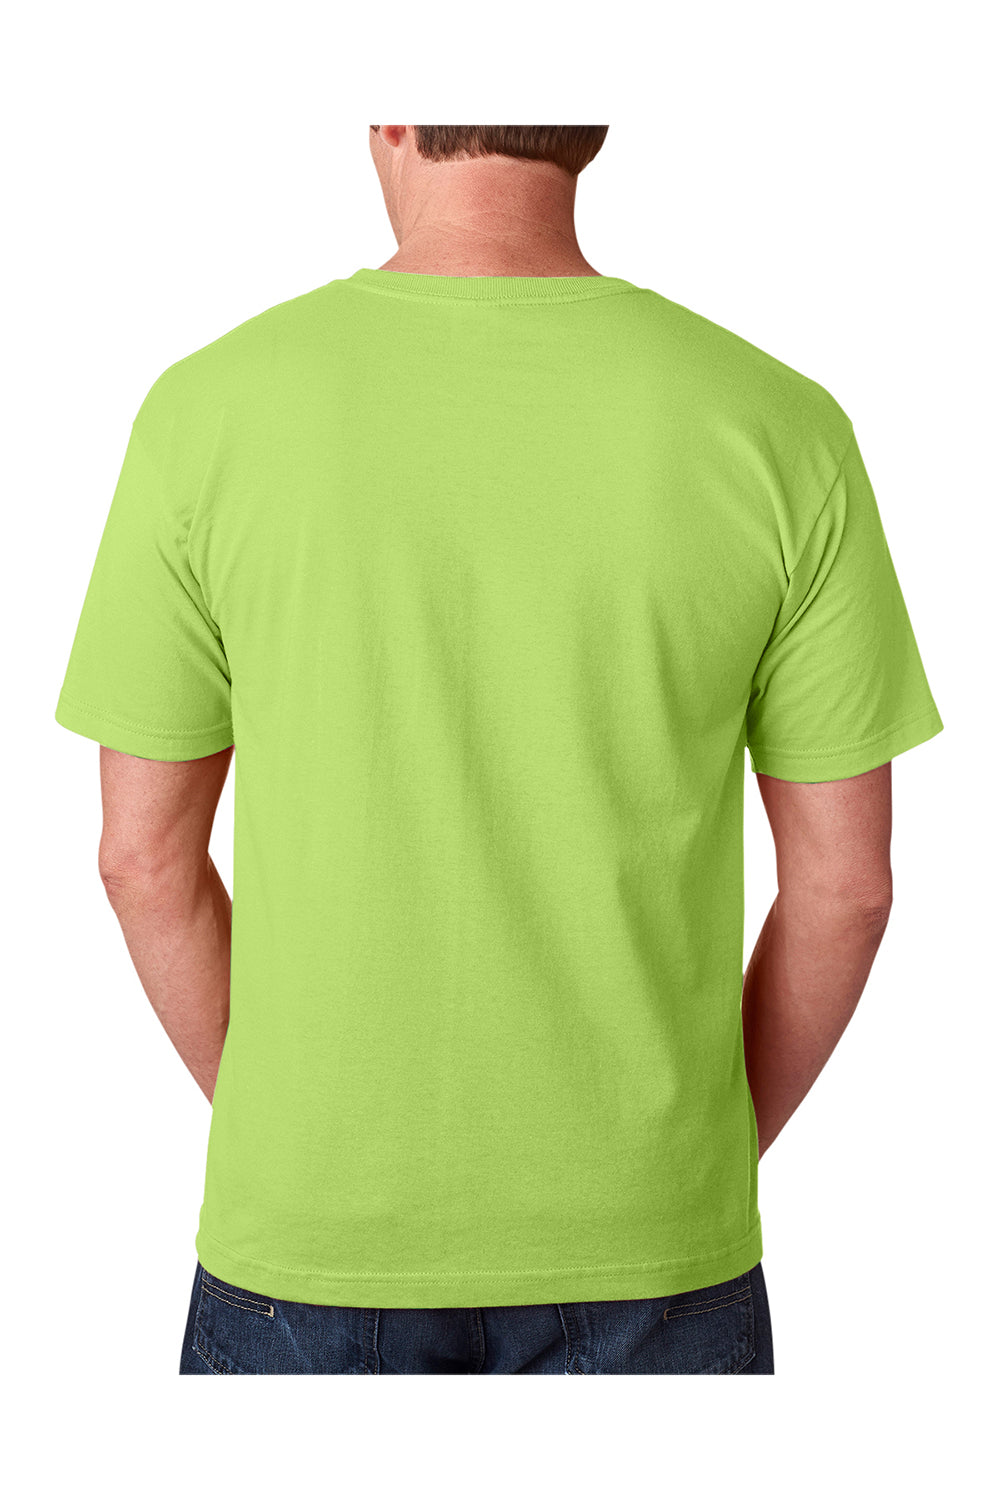 Bayside BA5040 Mens USA Made Short Sleeve Crewneck T-Shirt Lime Green Model Back